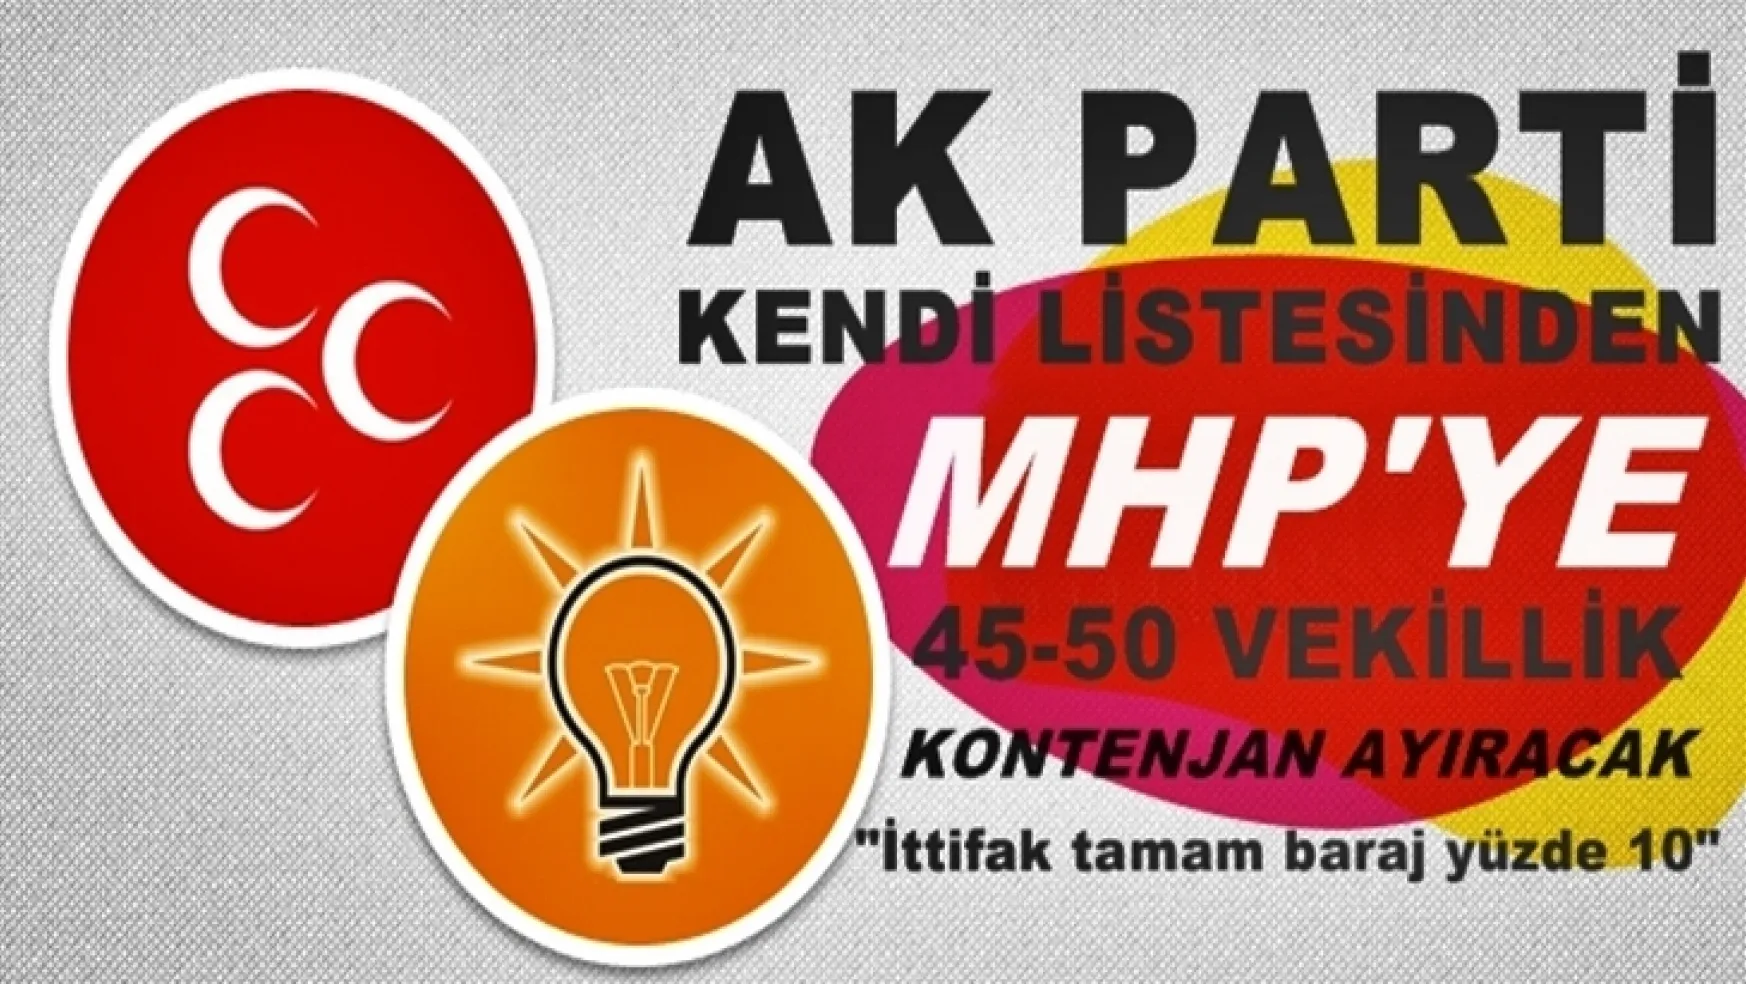 AK Parti, MHP'ye 45 - 50 vekillik kontenjan ayıracak!